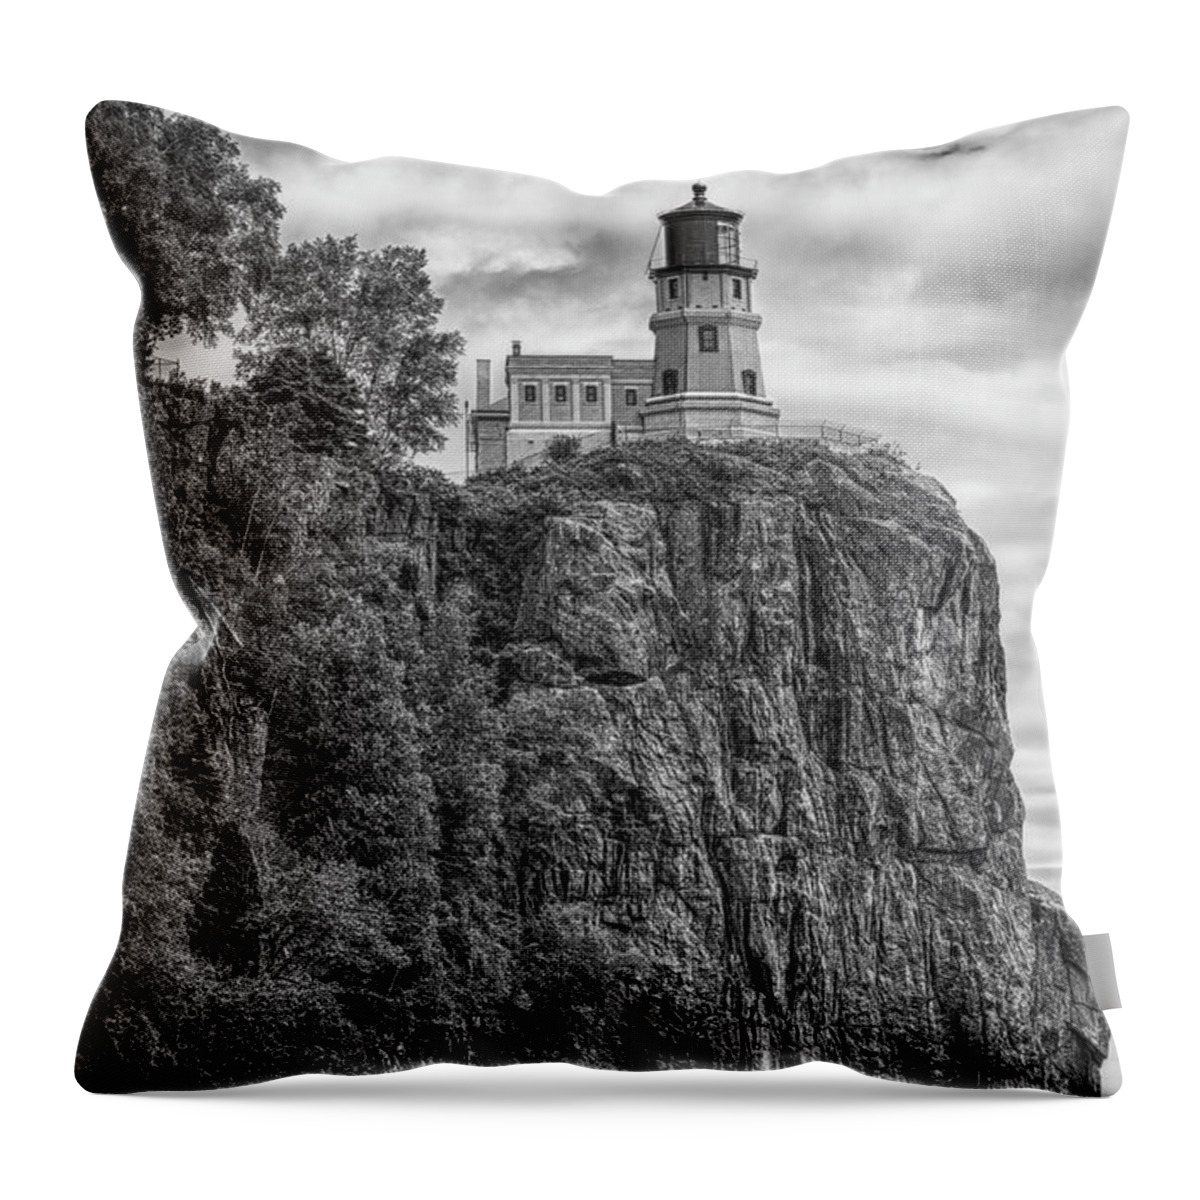 Lighthouse Throw Pillow featuring the photograph Split Rock Lighthouse by John Roach